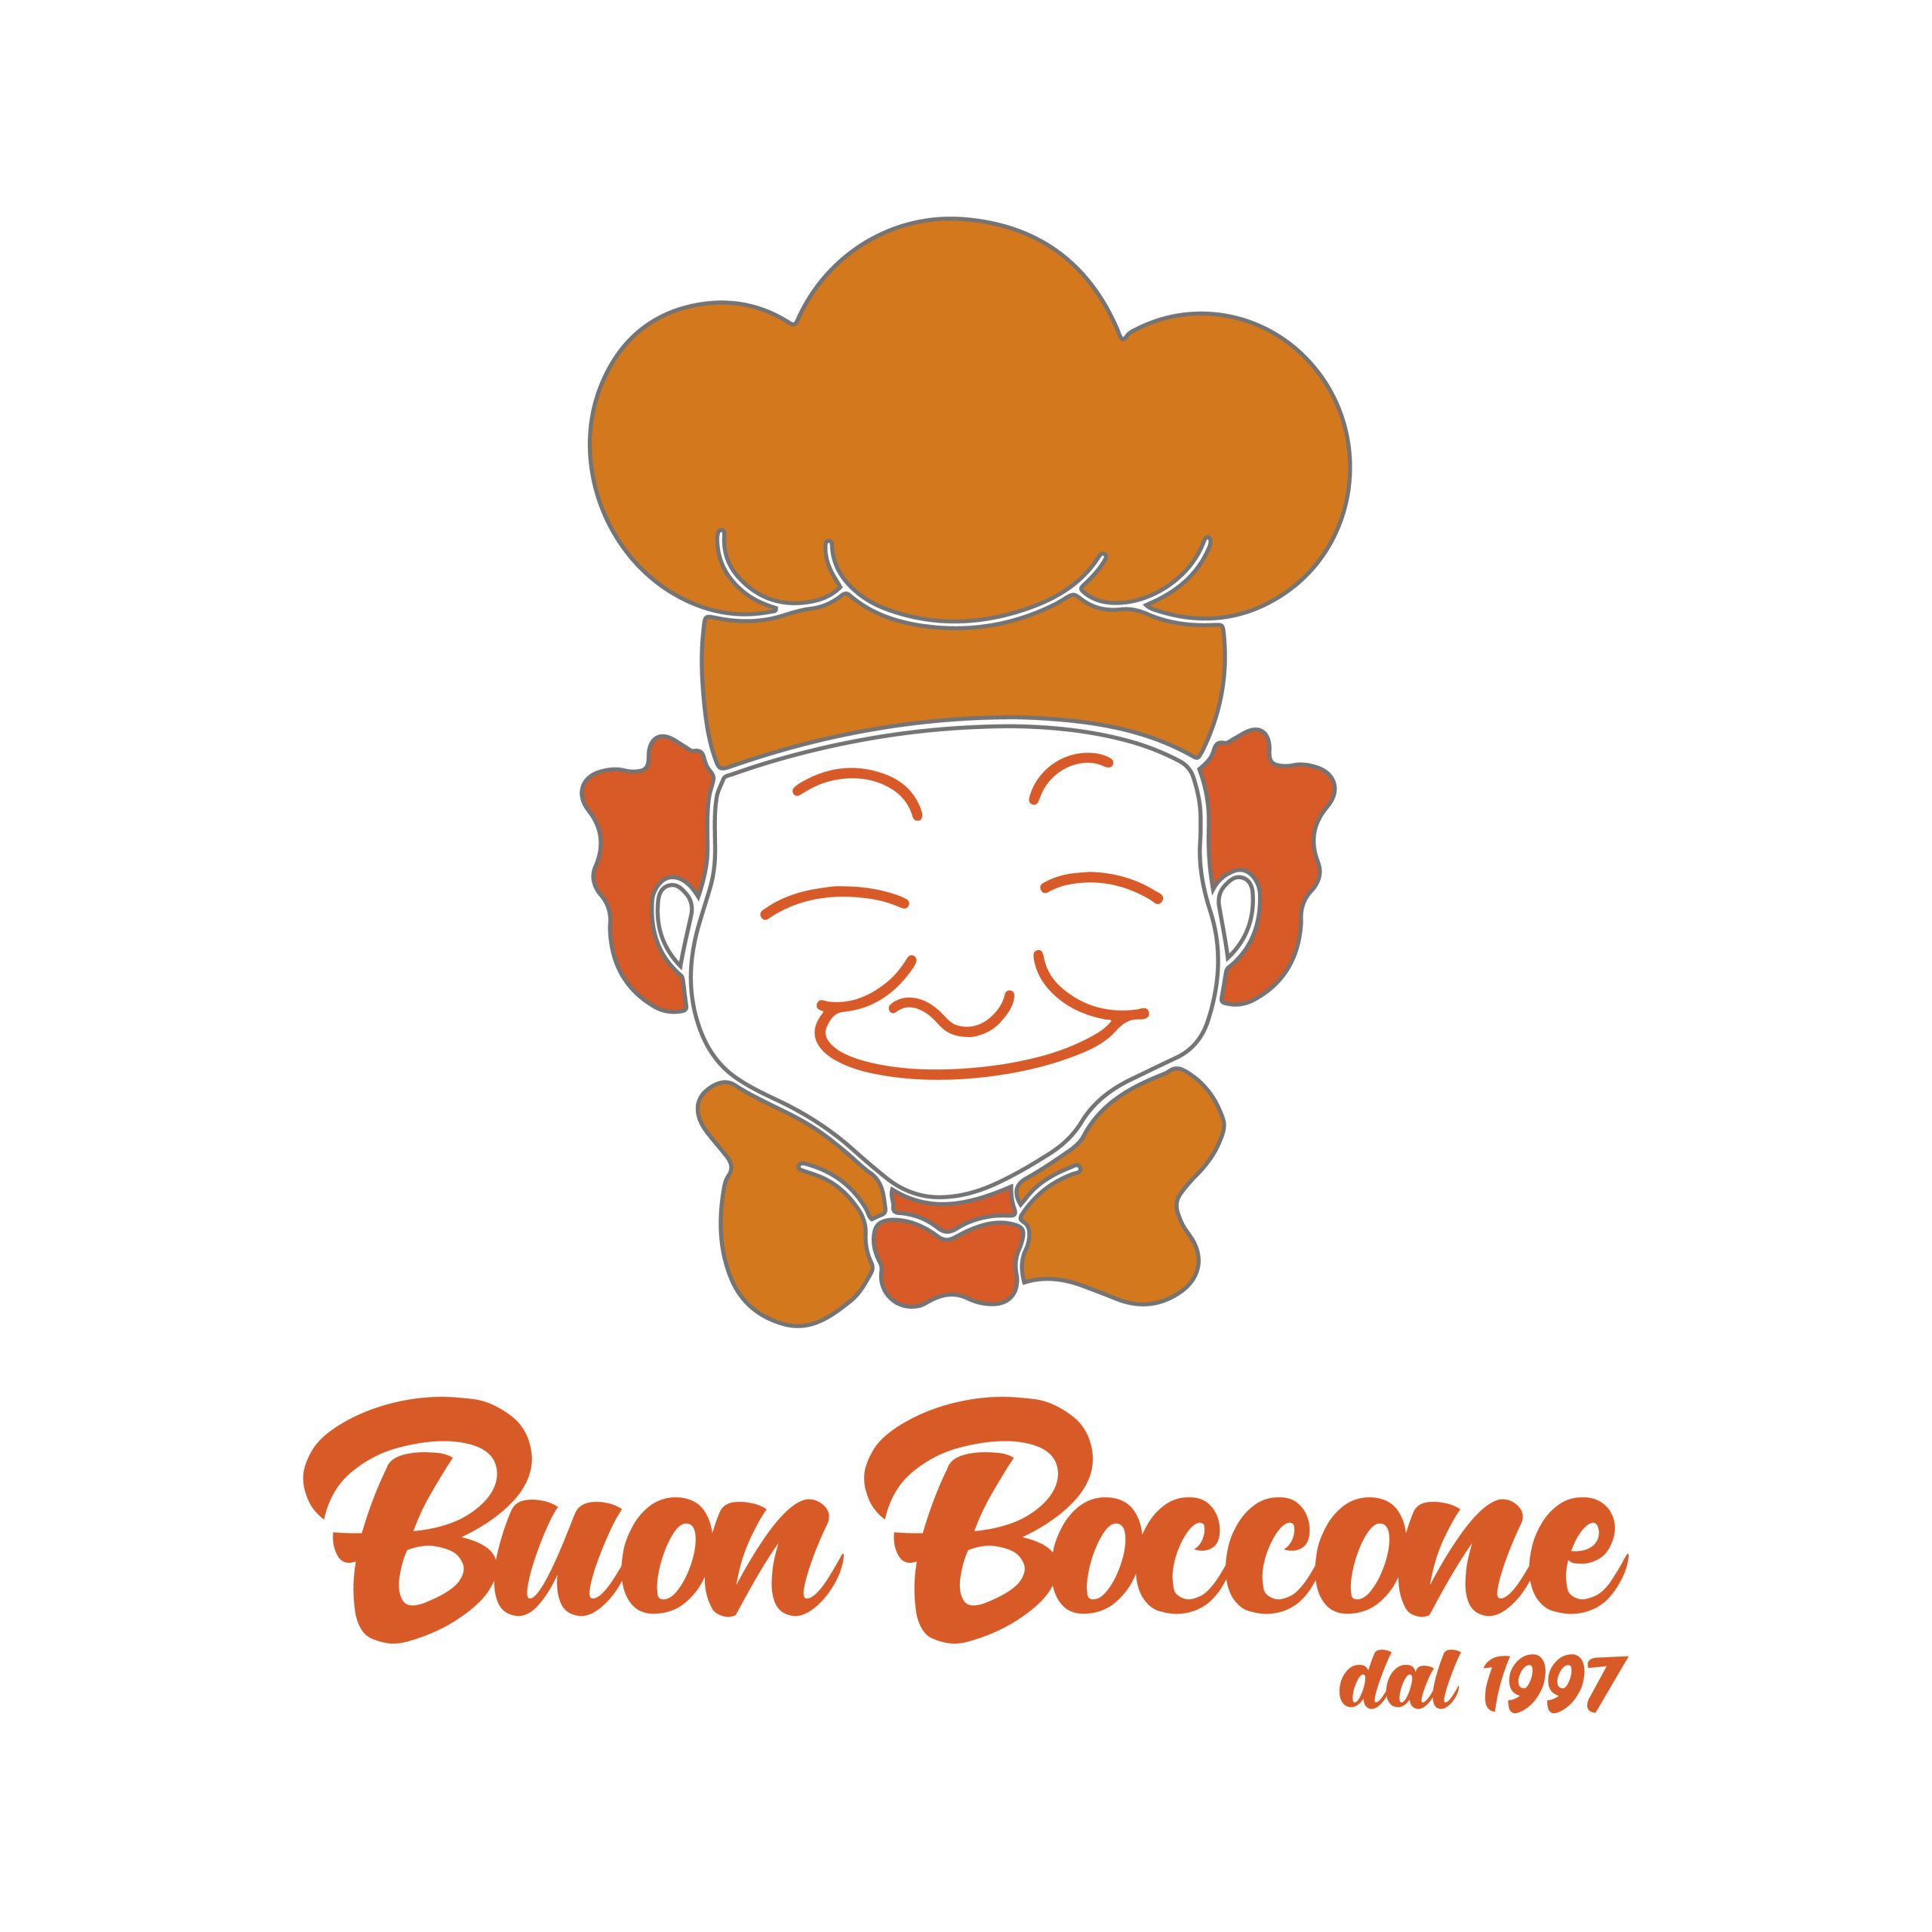 BuonBoccone - logo1000x1000